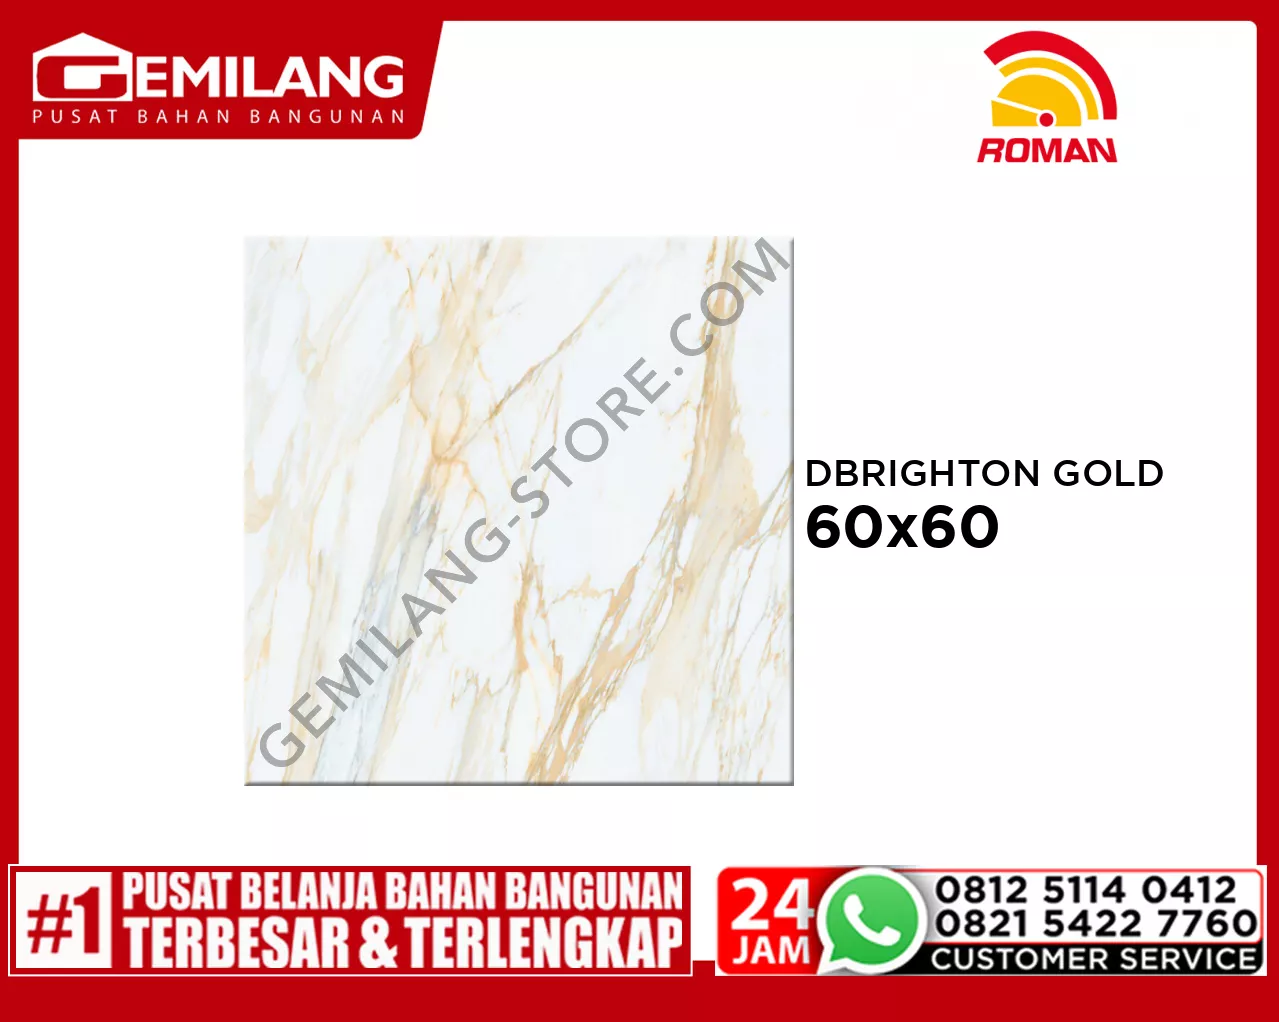 ROMAN GRANIT DBRIGHTON GOLD (GT609870FR) 60 x 60